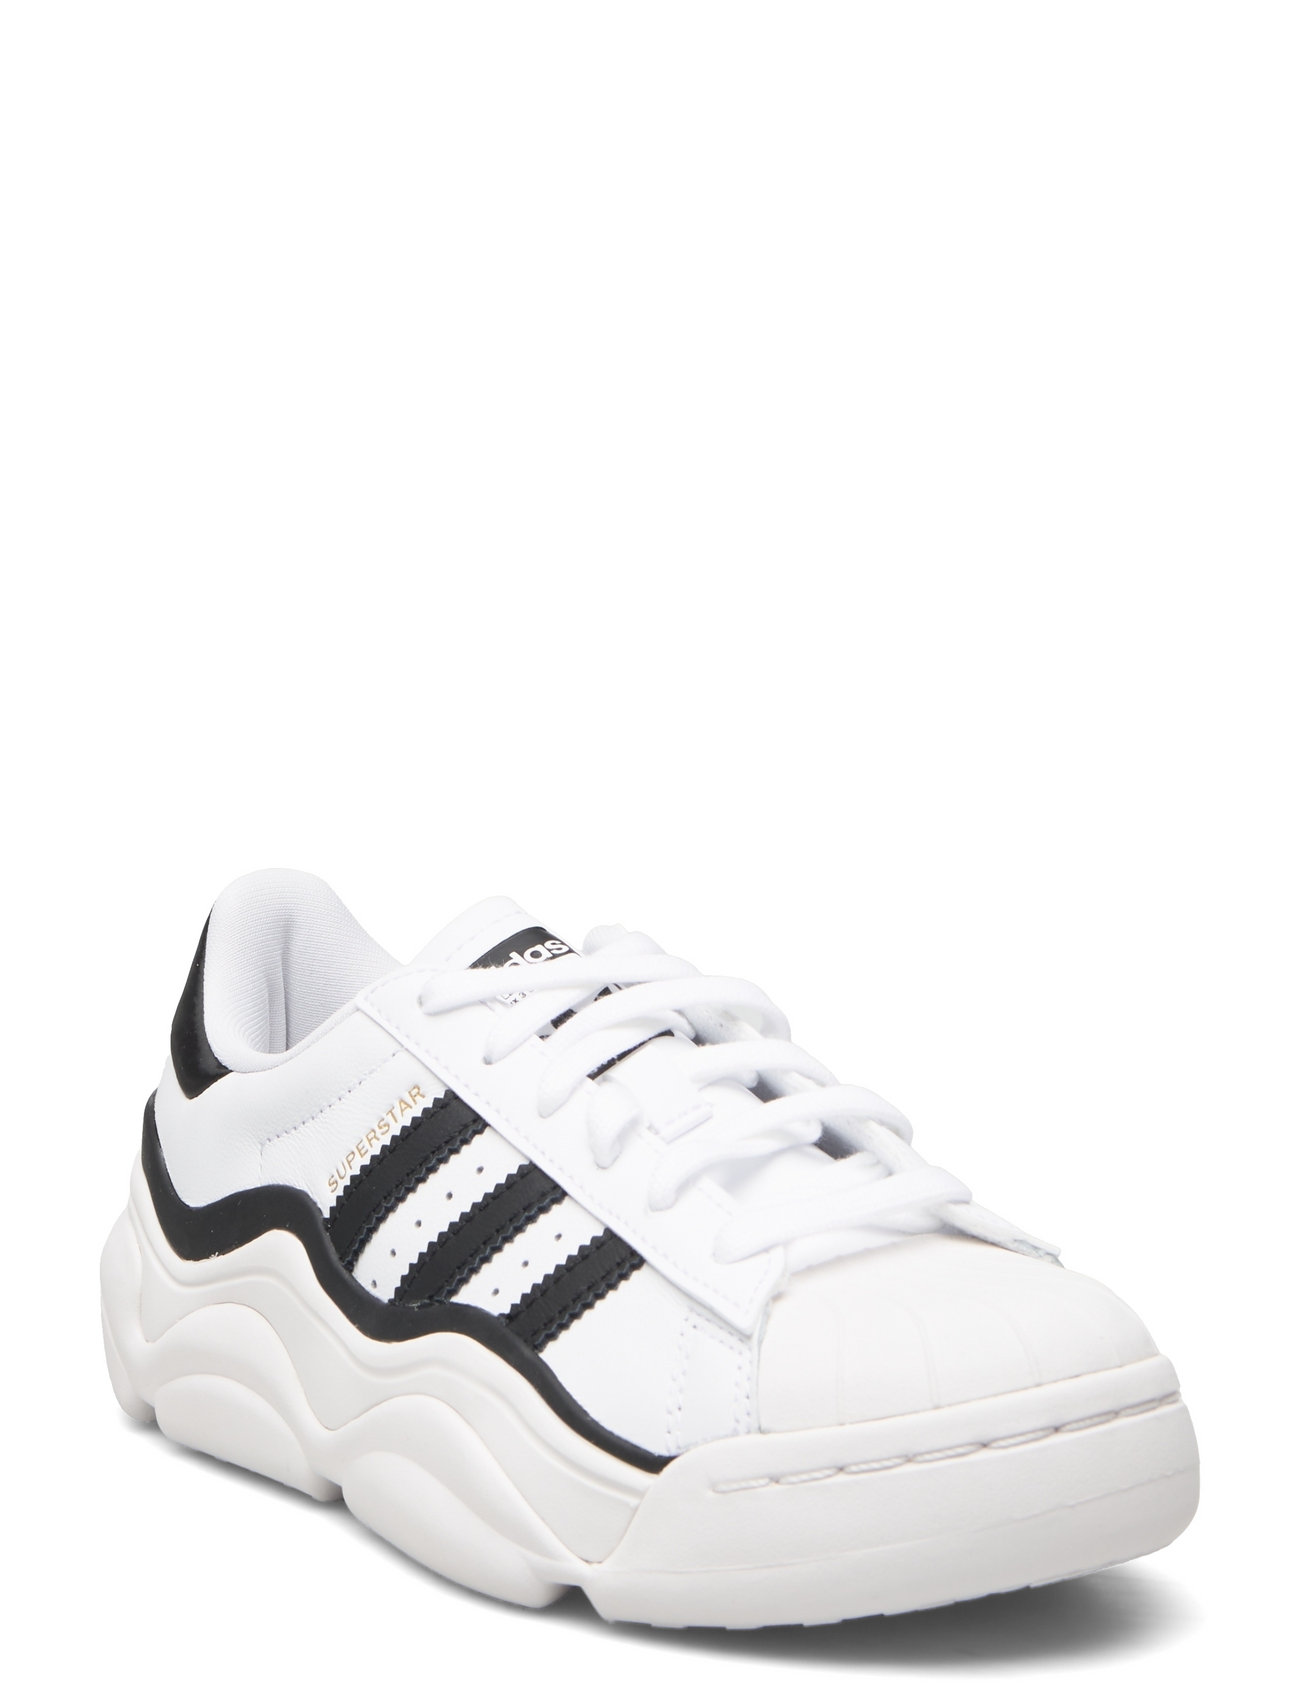 Superstar Millencon W Sport Sneakers Low-top Sneakers White Adidas Originals